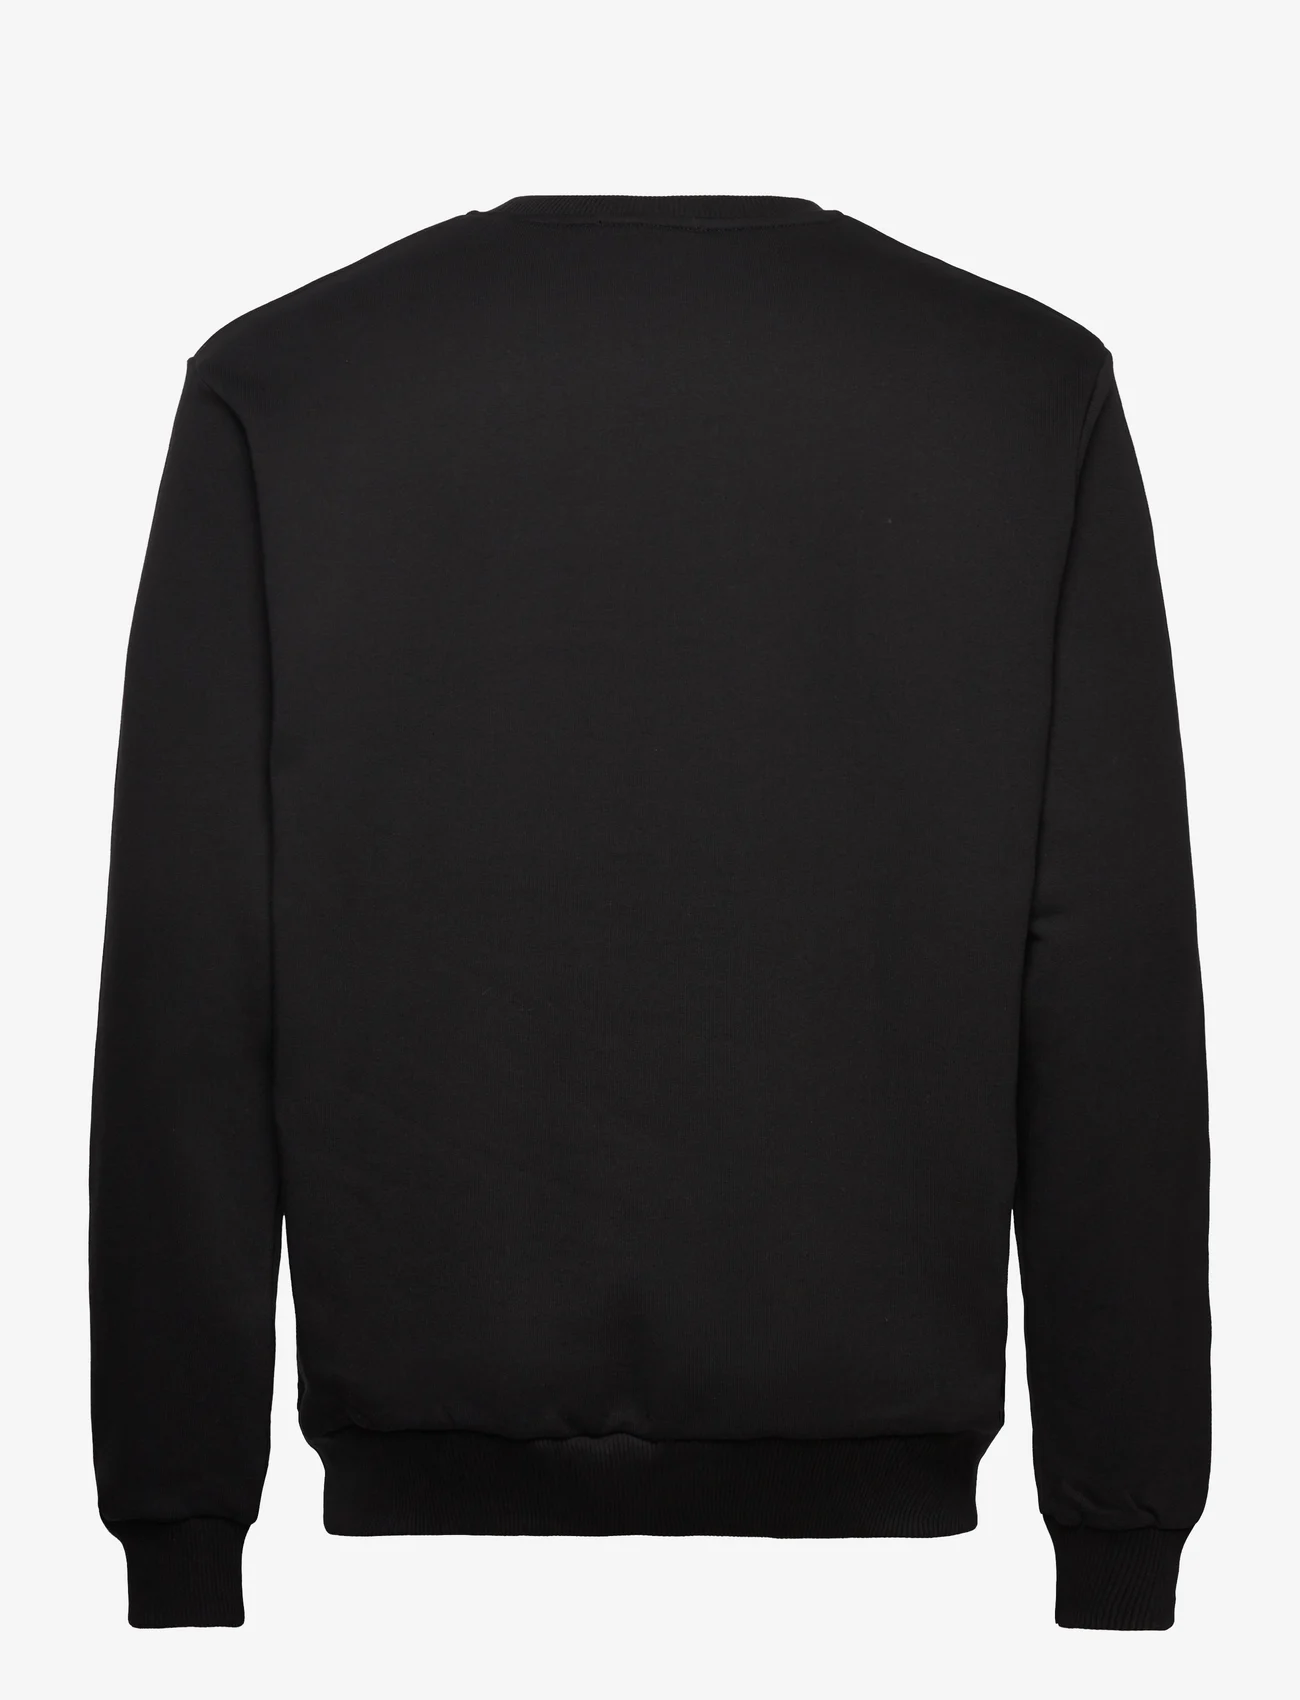 Les Deux - Blake Sweatshirt - sweatshirts - black/ivory - 1